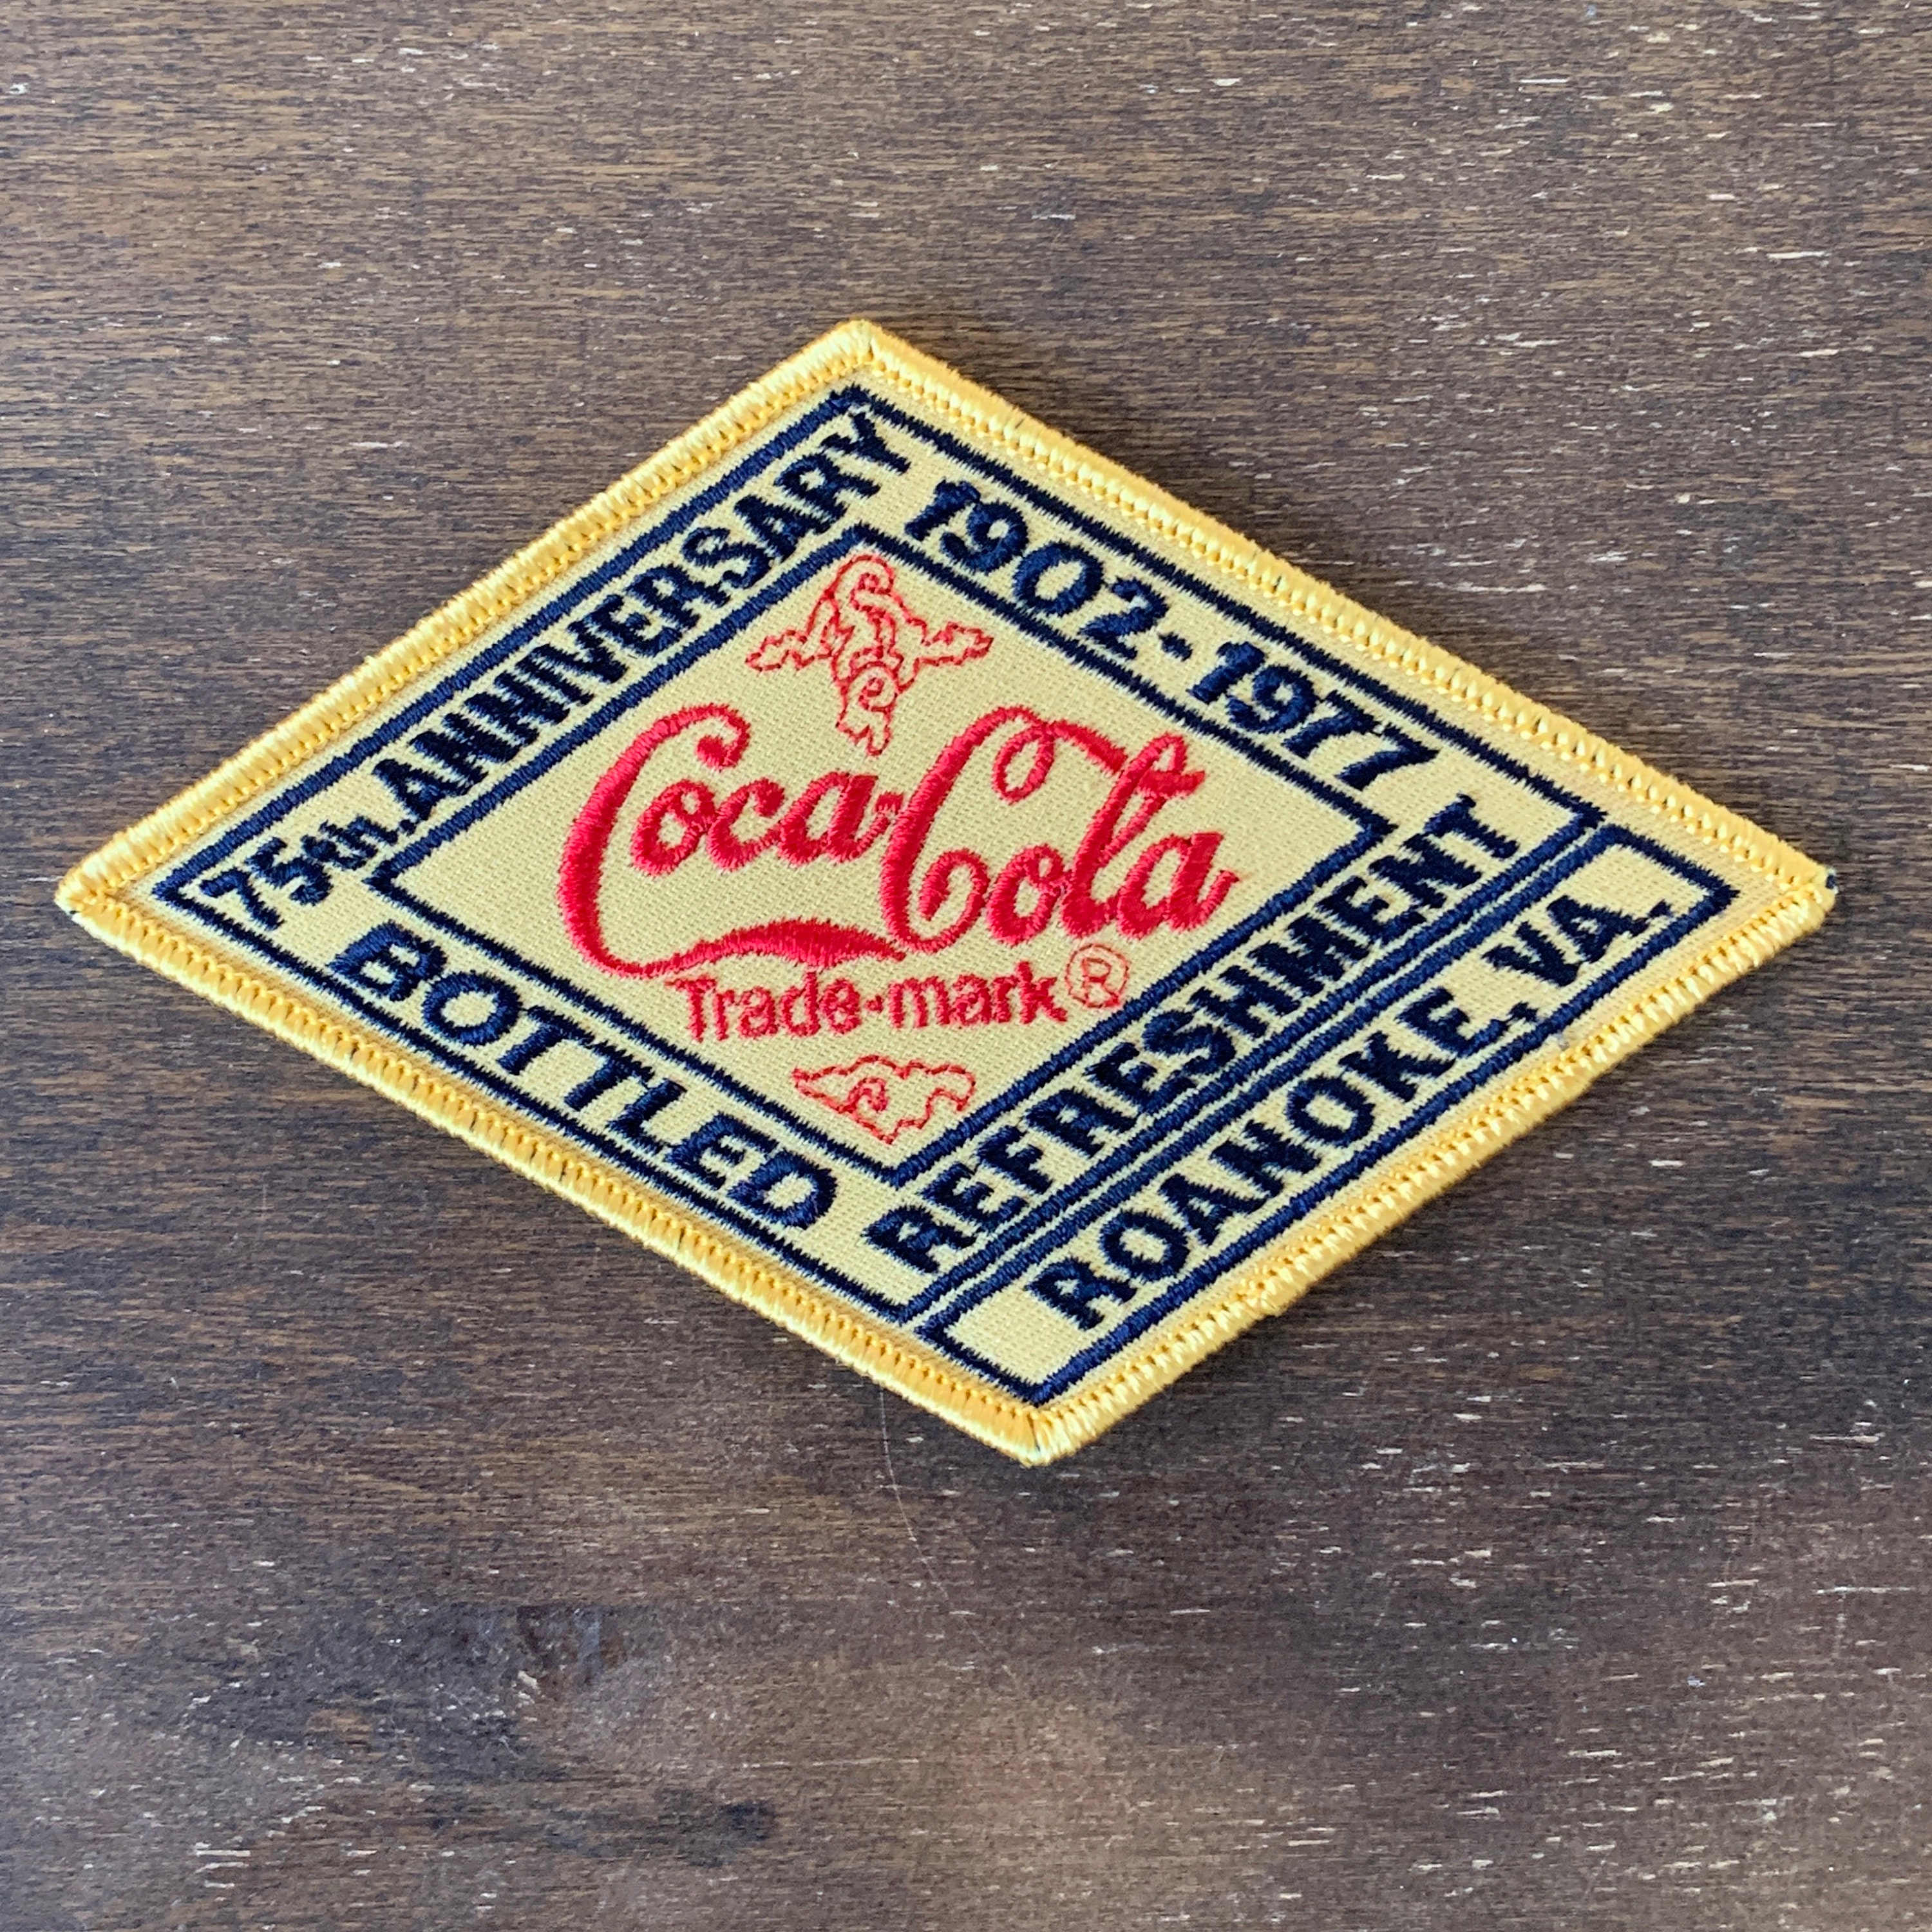 Coca Cola 75th Anniversary Roanoke VA Bottling Company Patch